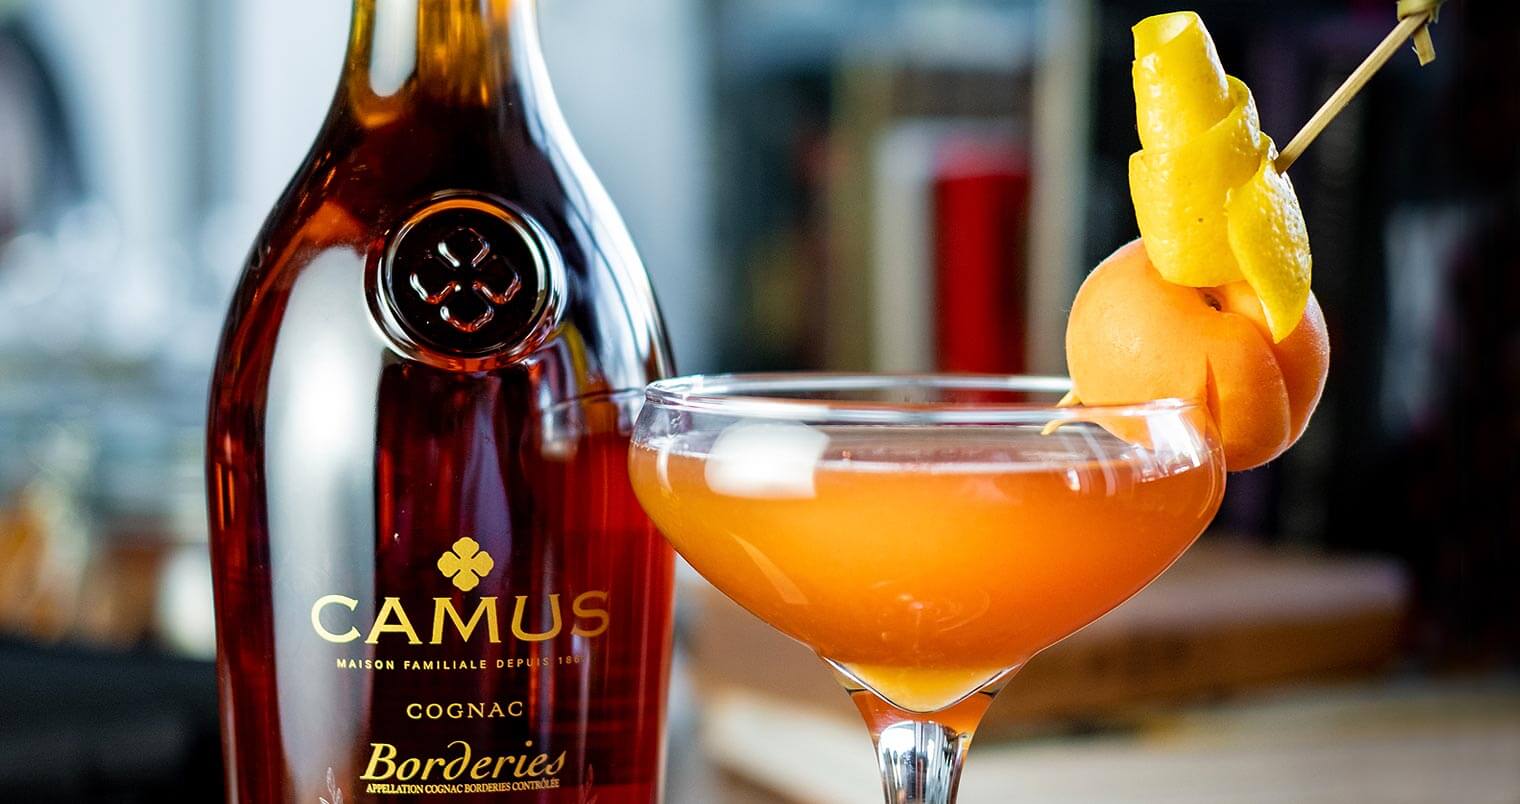 L'abricot Voyageur cocktail, featured image